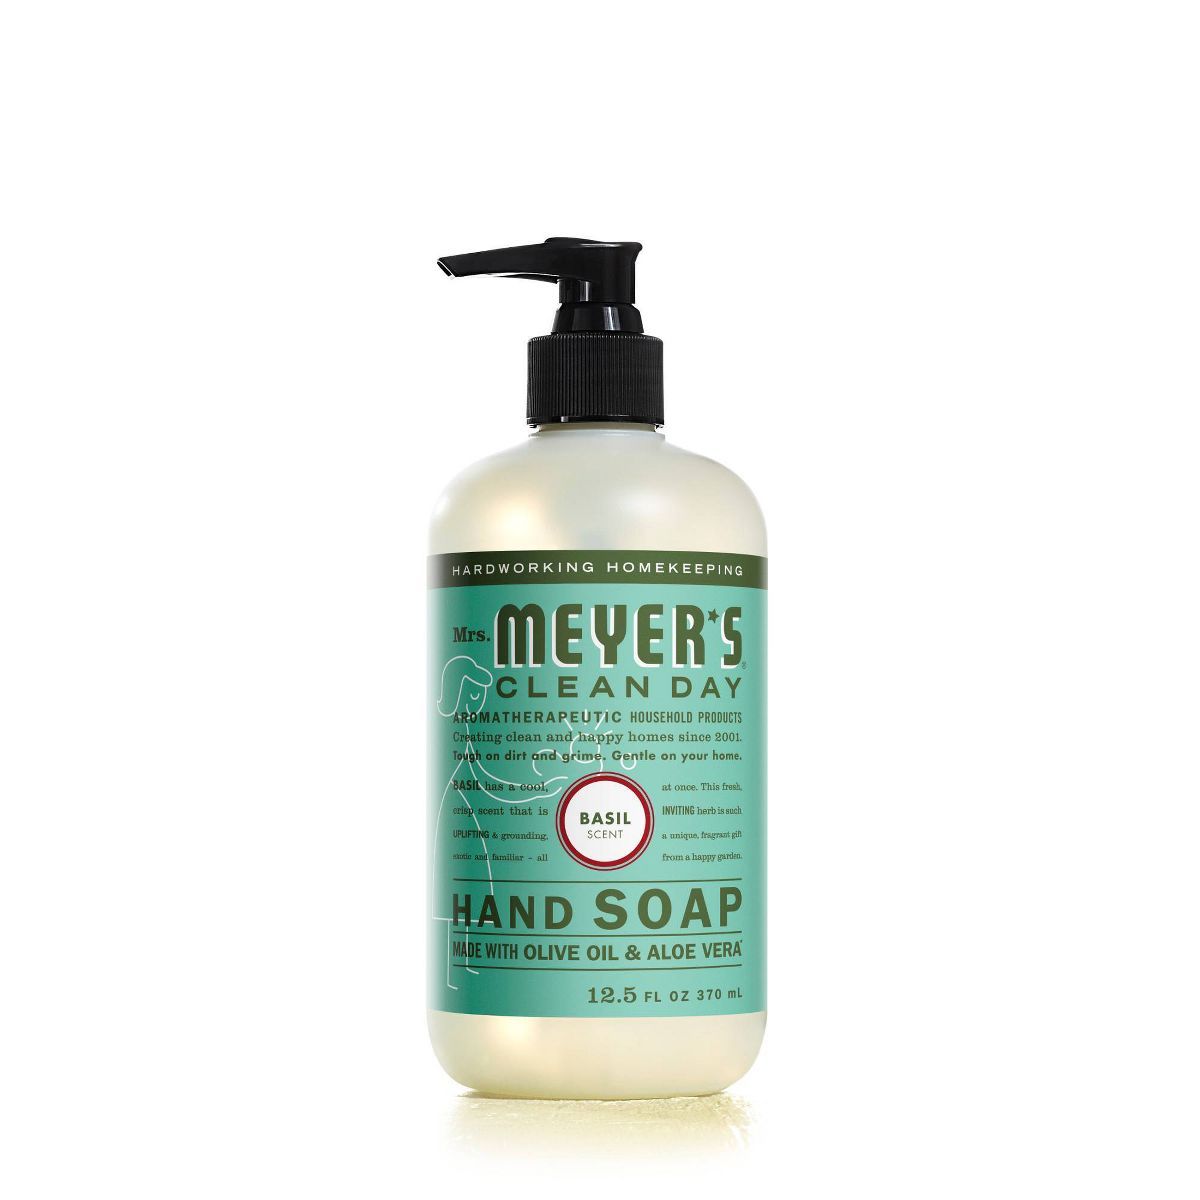 Mrs. Meyer's Clean Day Basil Scent Liquid Hand Soap - 12.5 fl oz | Target